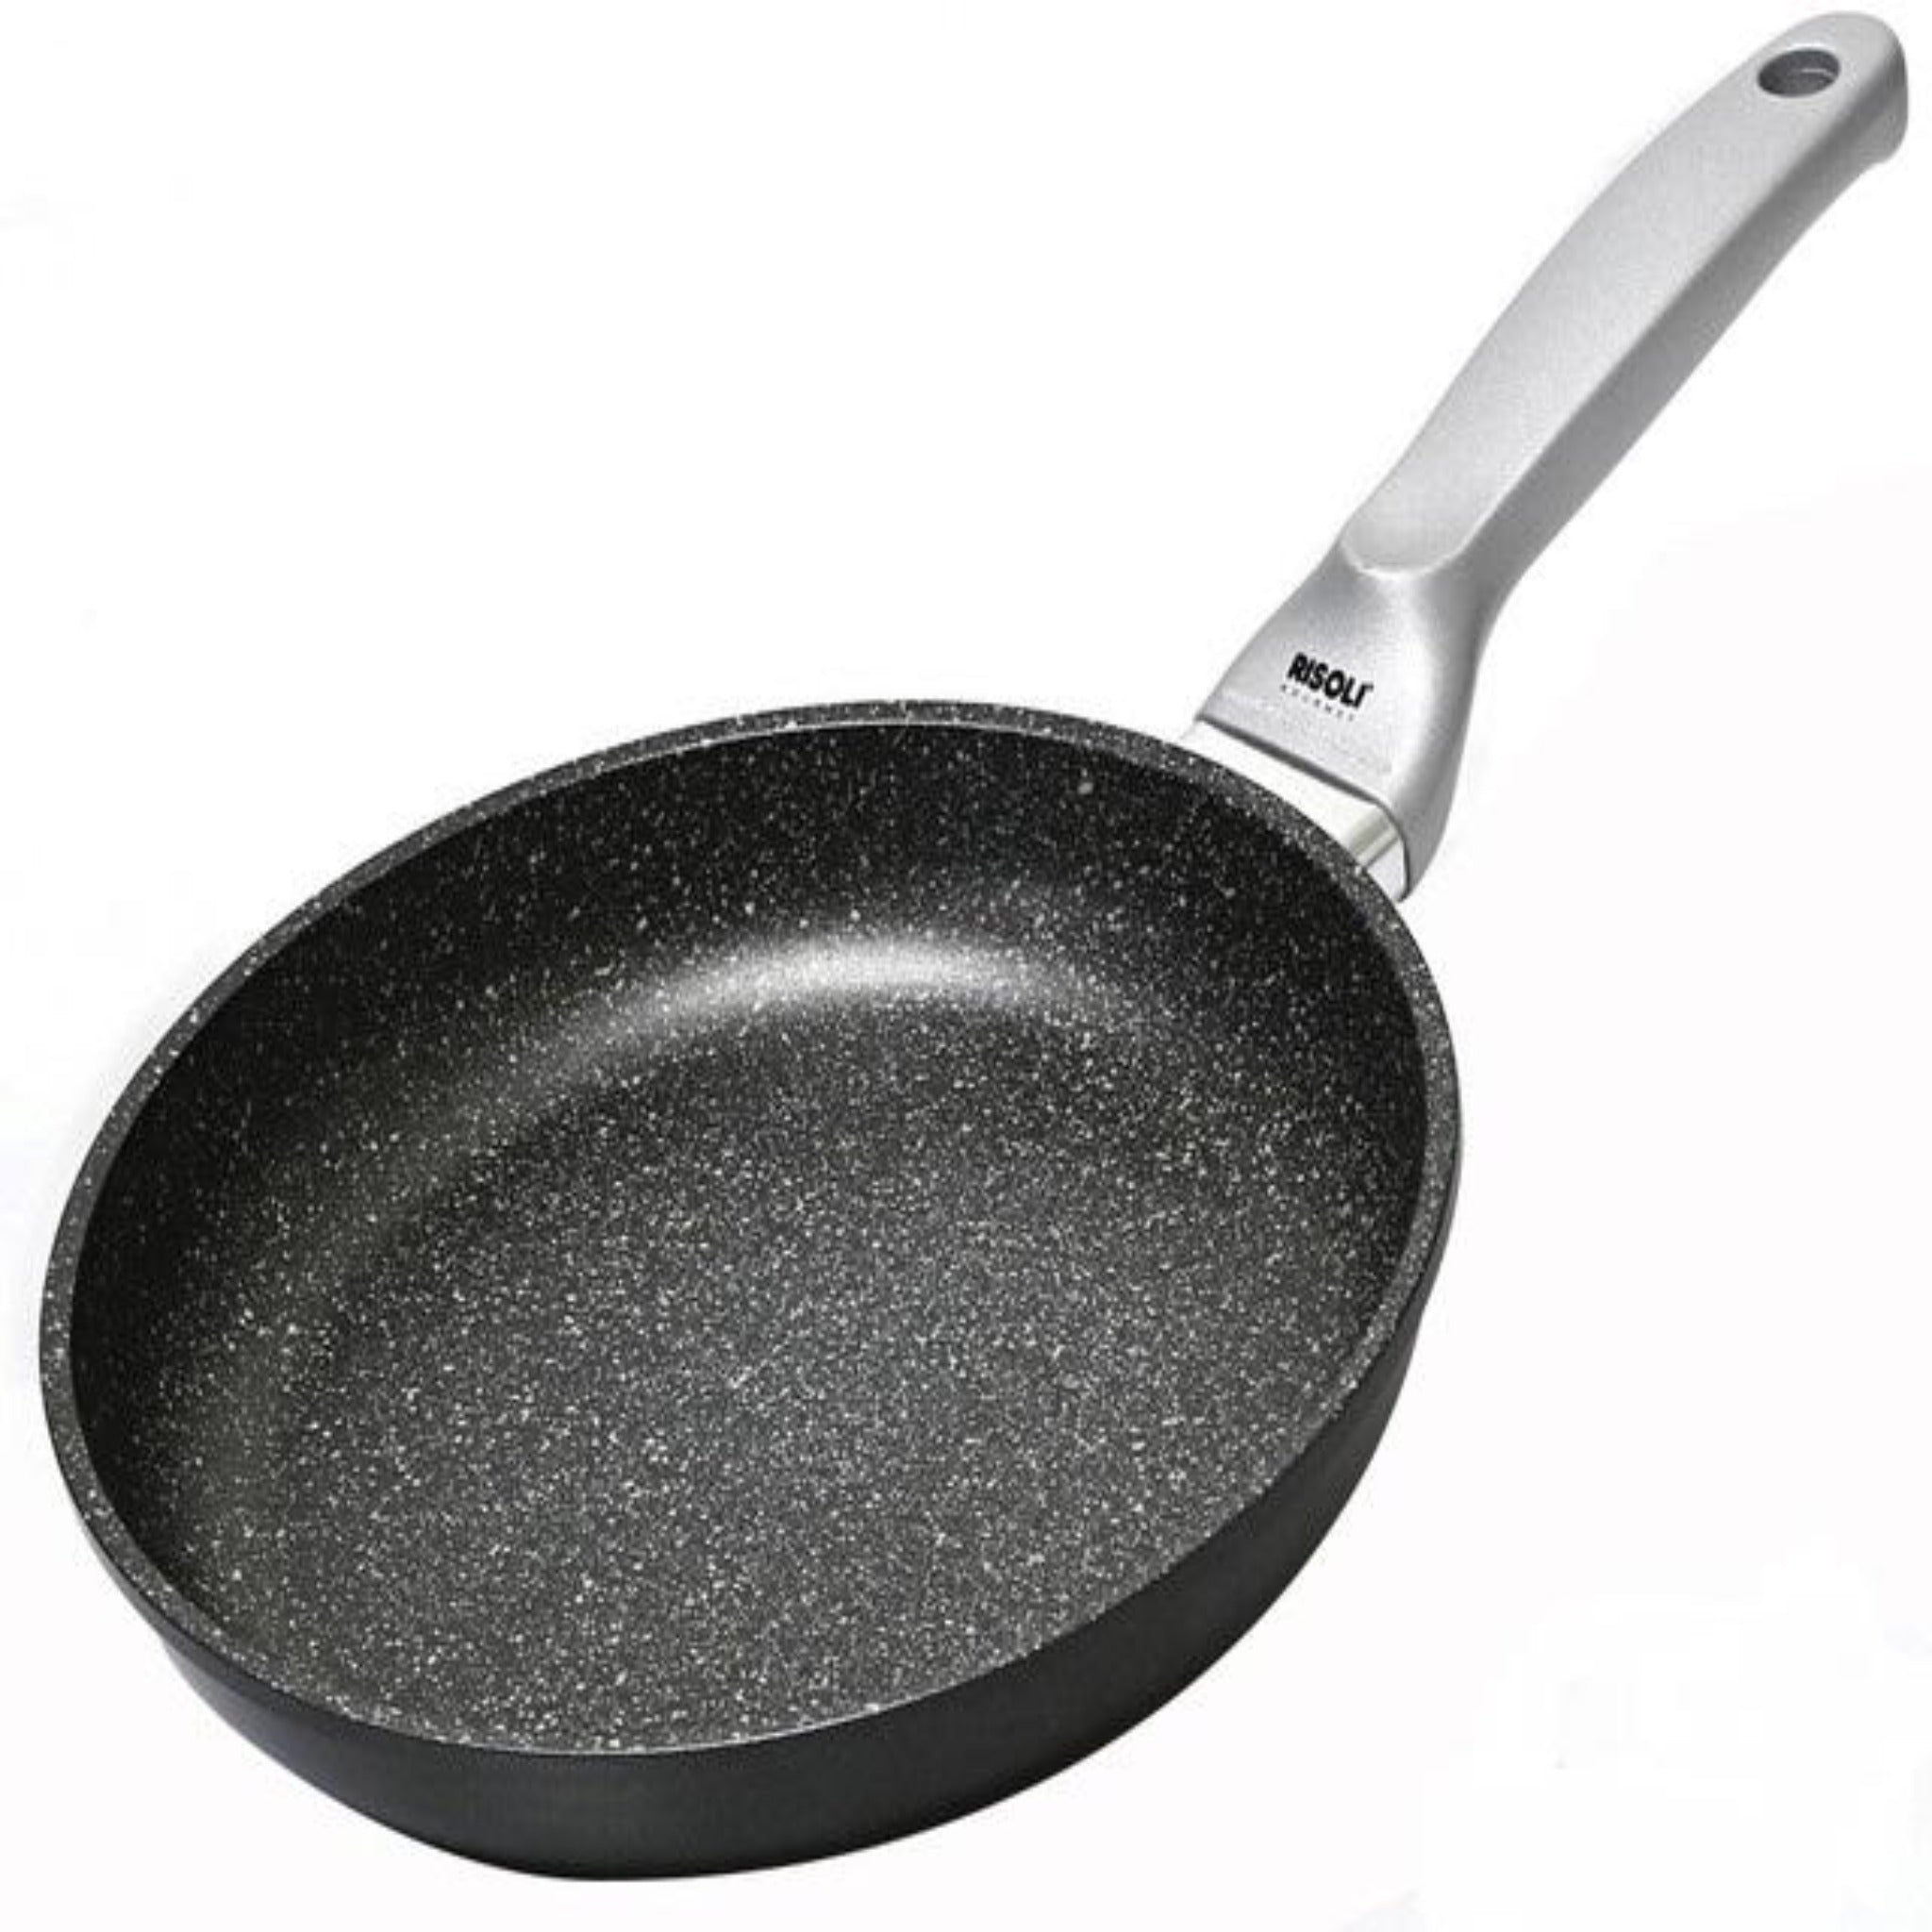 Risoli Granito Fry Pan with Silver Handle 20 cm - Black - 44000379